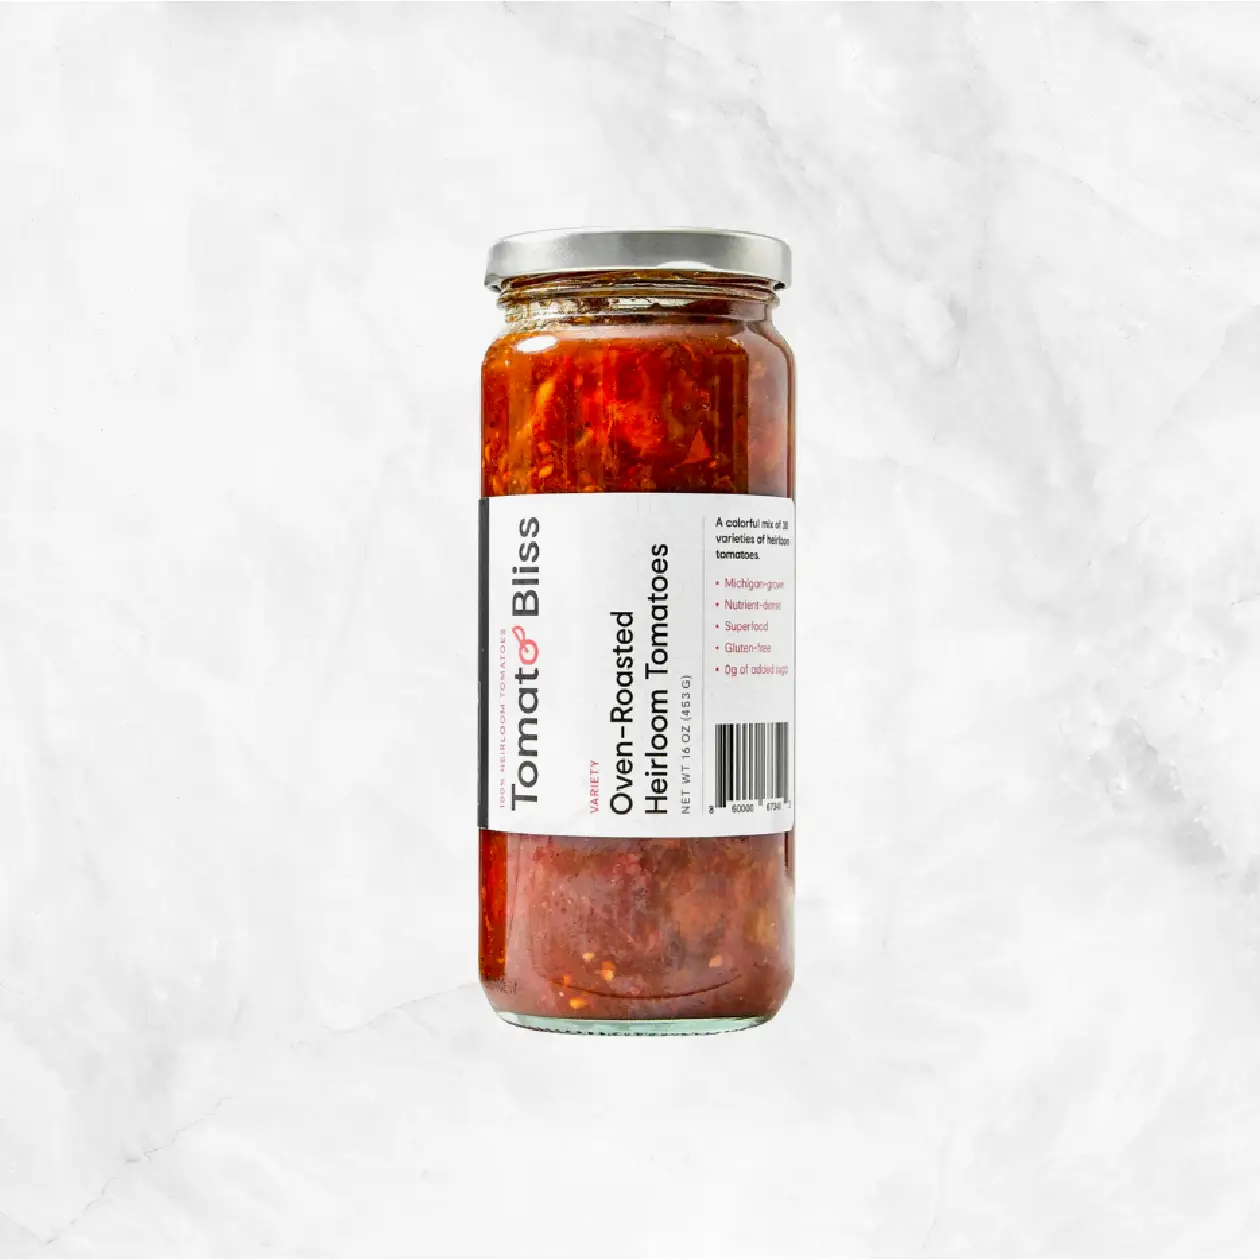 Oven-Roasted Heirloom Tomatoes